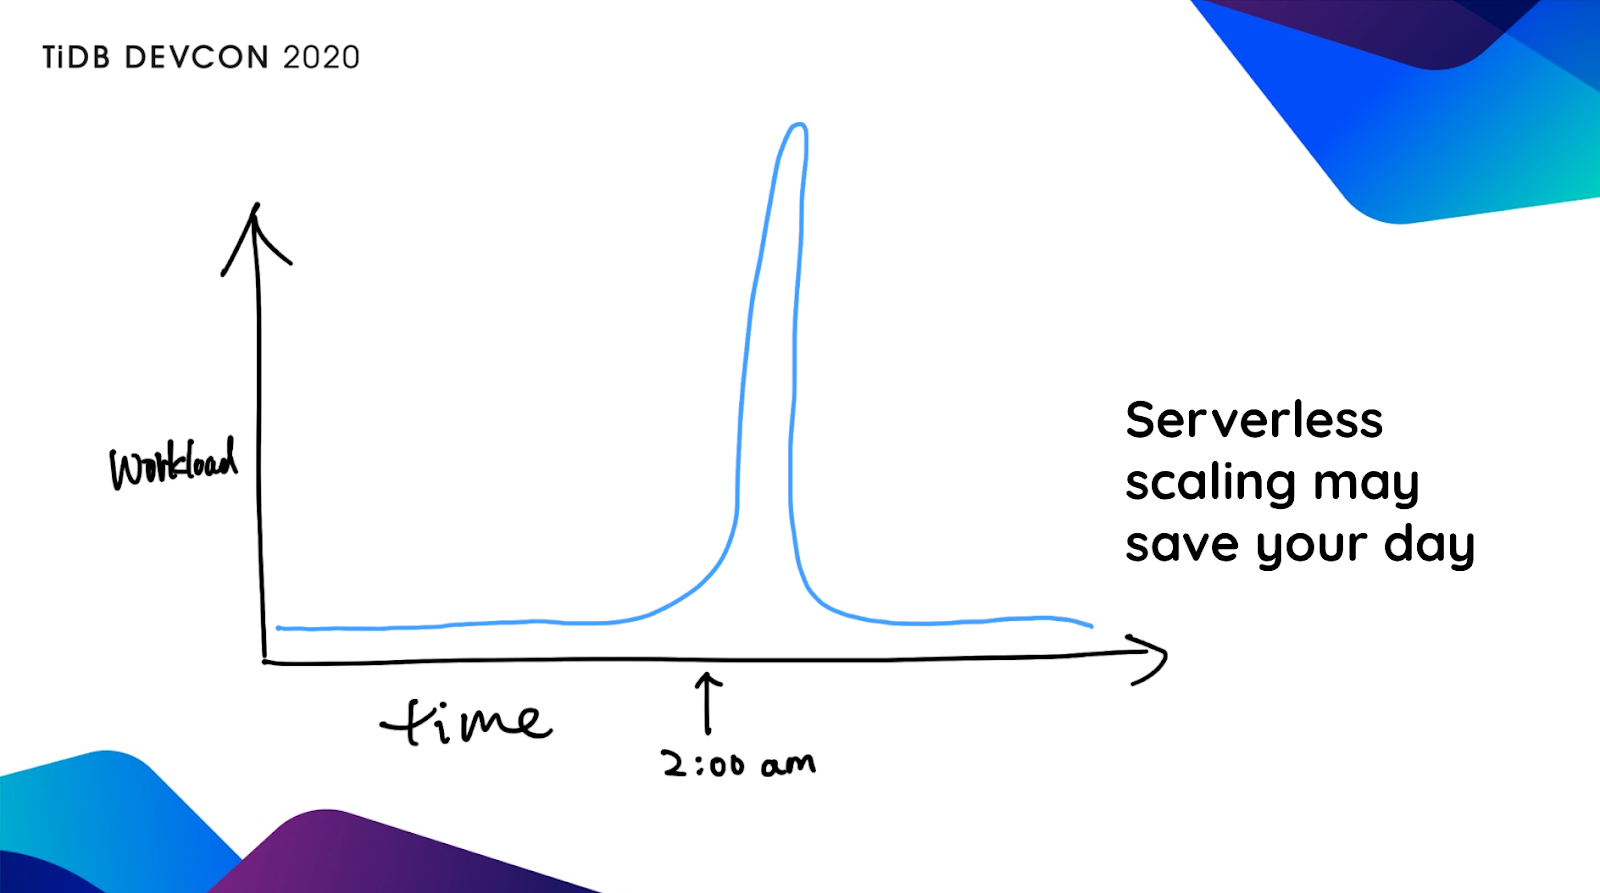 Serverless scaling